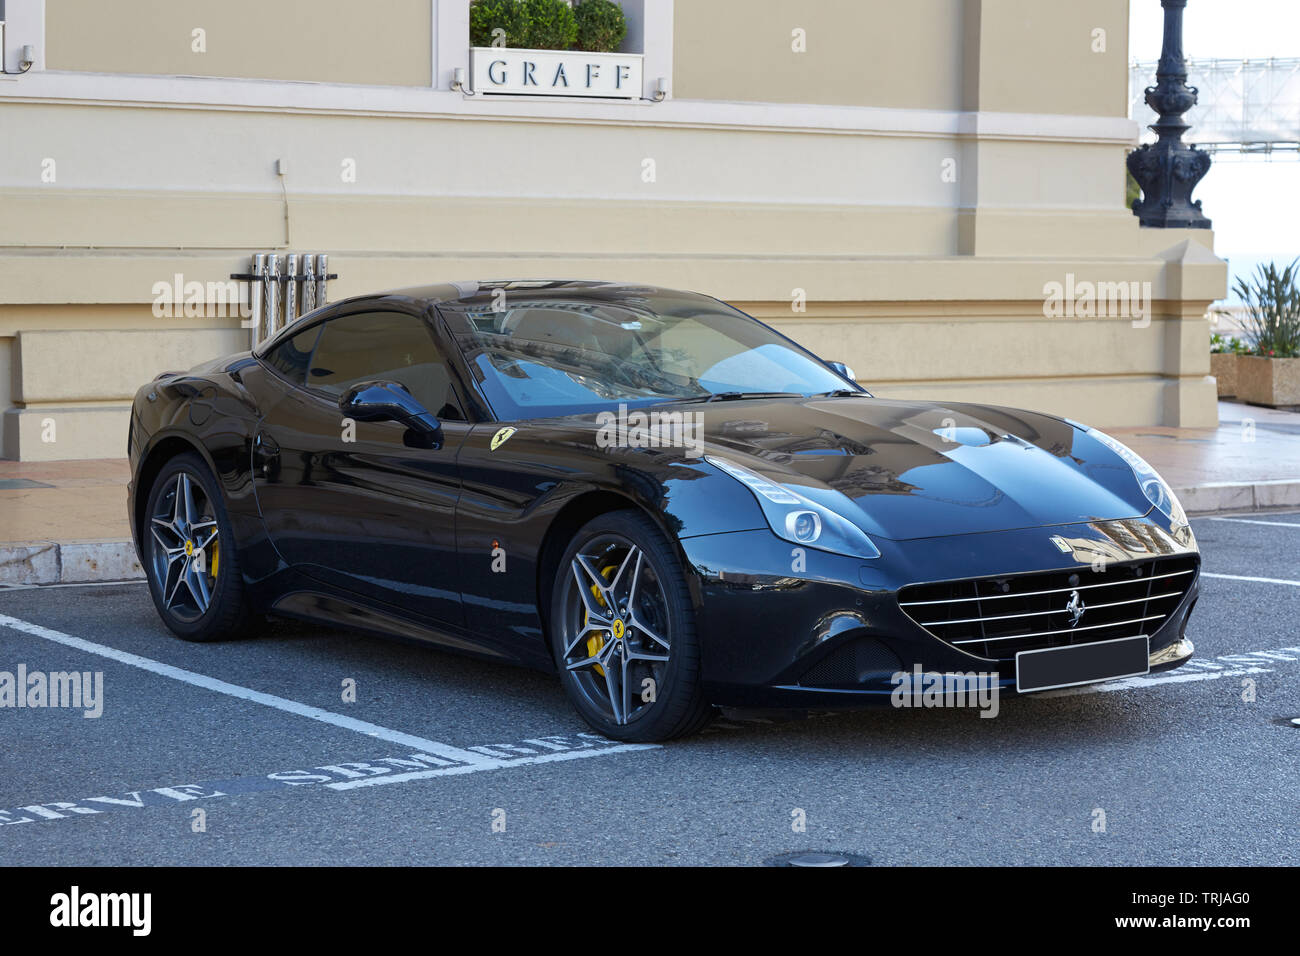 MONTE CARLO, MONACO - 21. AUGUST 2016: Ferrari California schwarz Luxus Auto an einem Sommertag in Monte Carlo, Monaco. Stockfoto